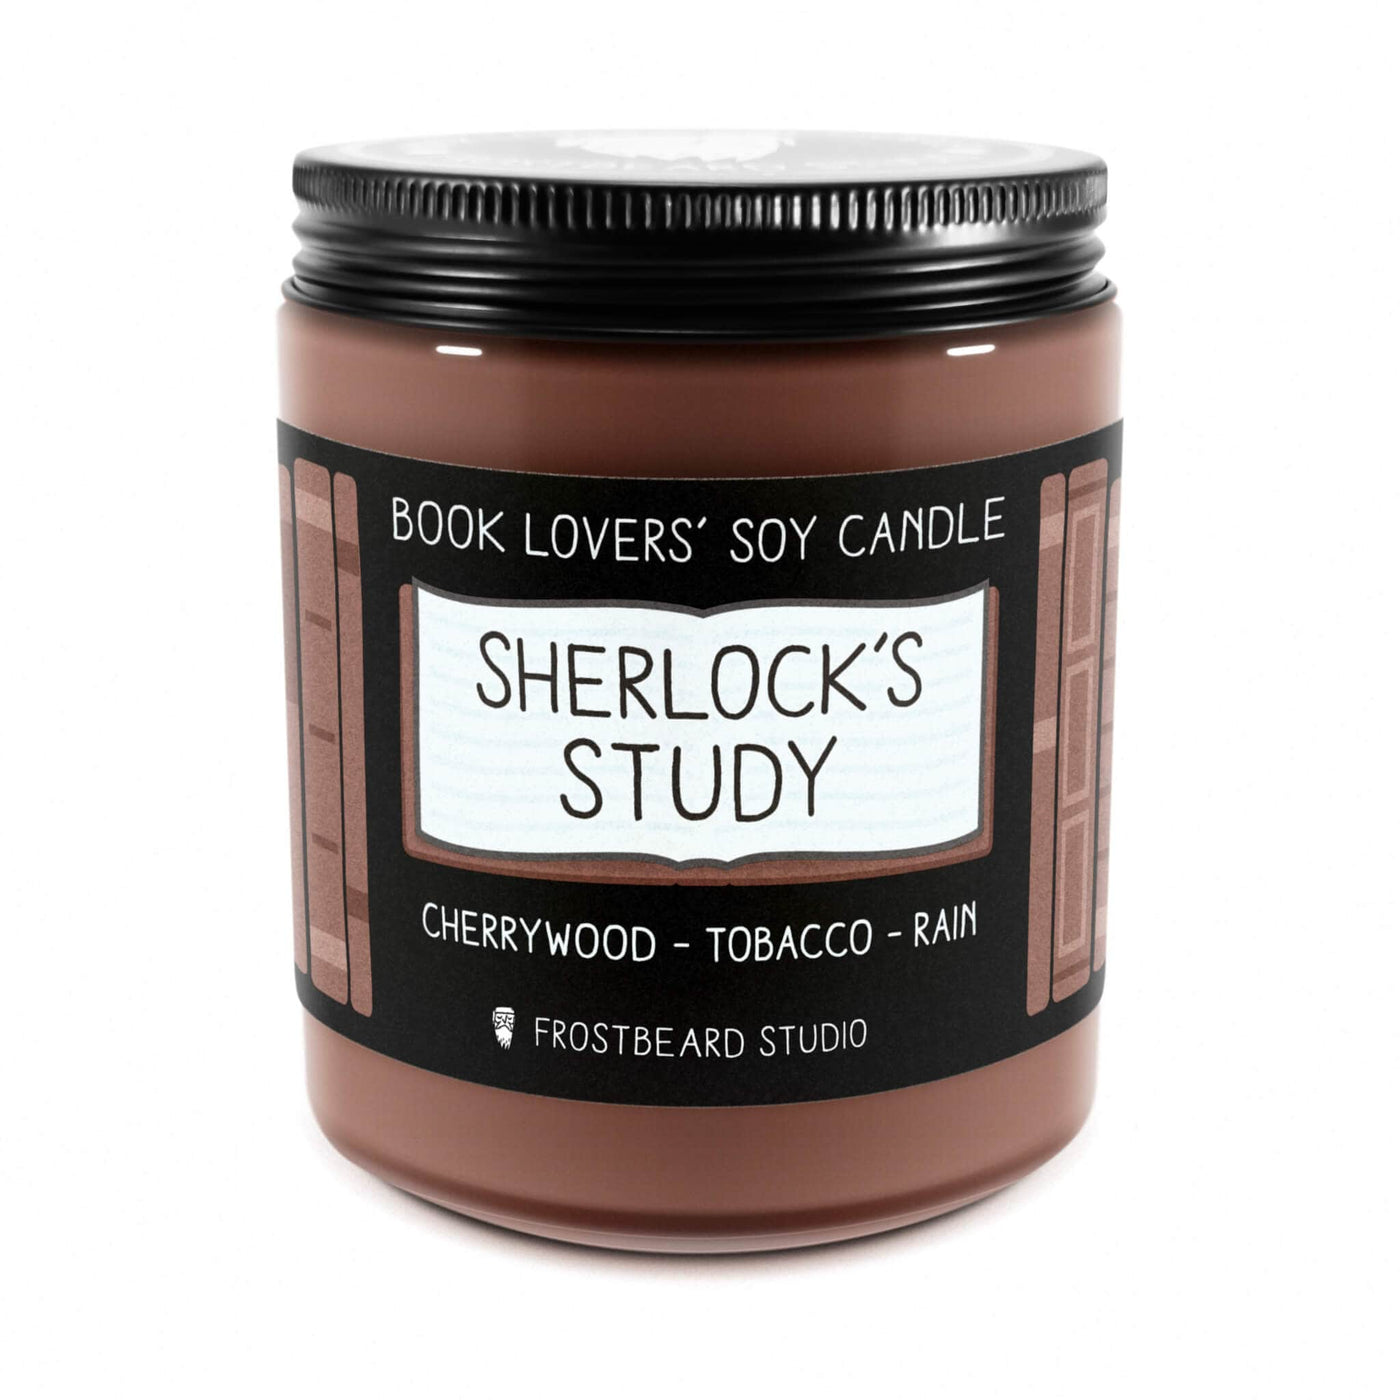 Sherlock's Study - 8 oz Jar - Book Lovers' Soy Candle - Frostbeard Studio